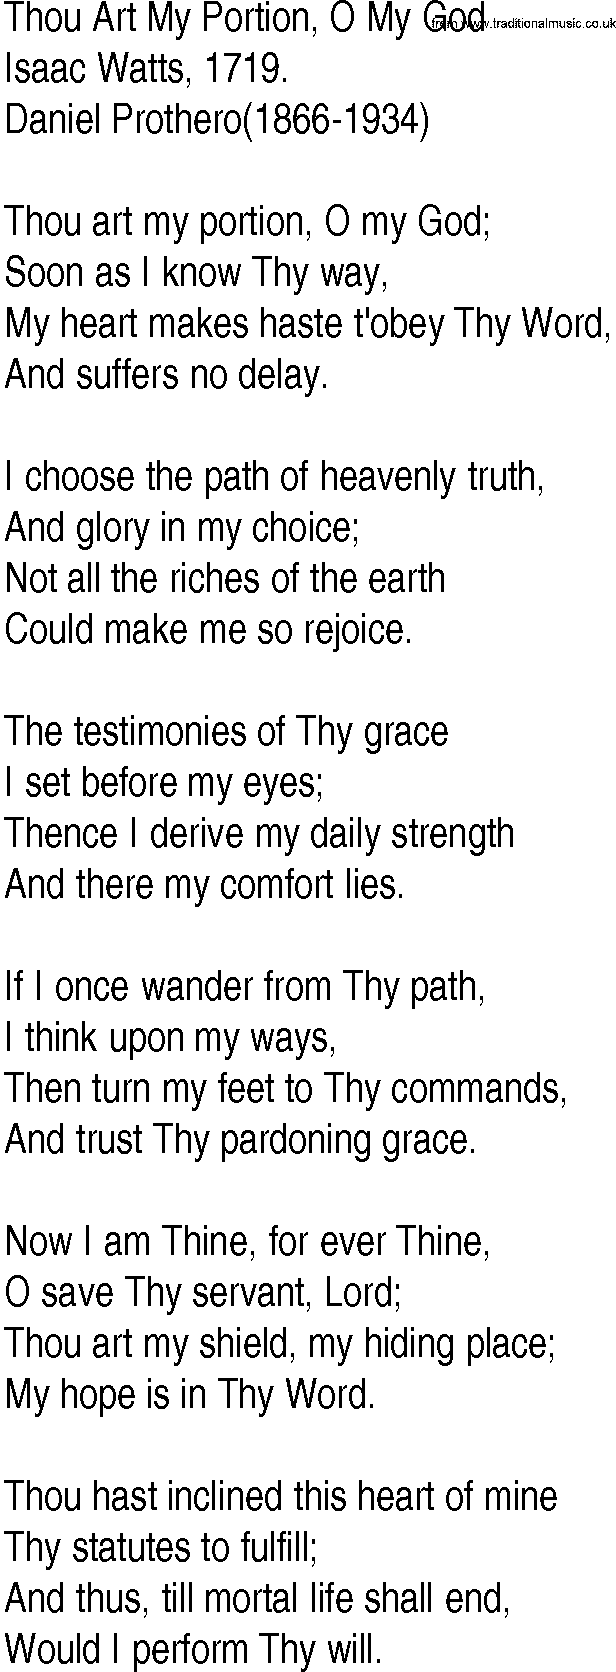 Hymn and Gospel Song: Thou Art My Portion, O My God by Isaac Watts lyrics